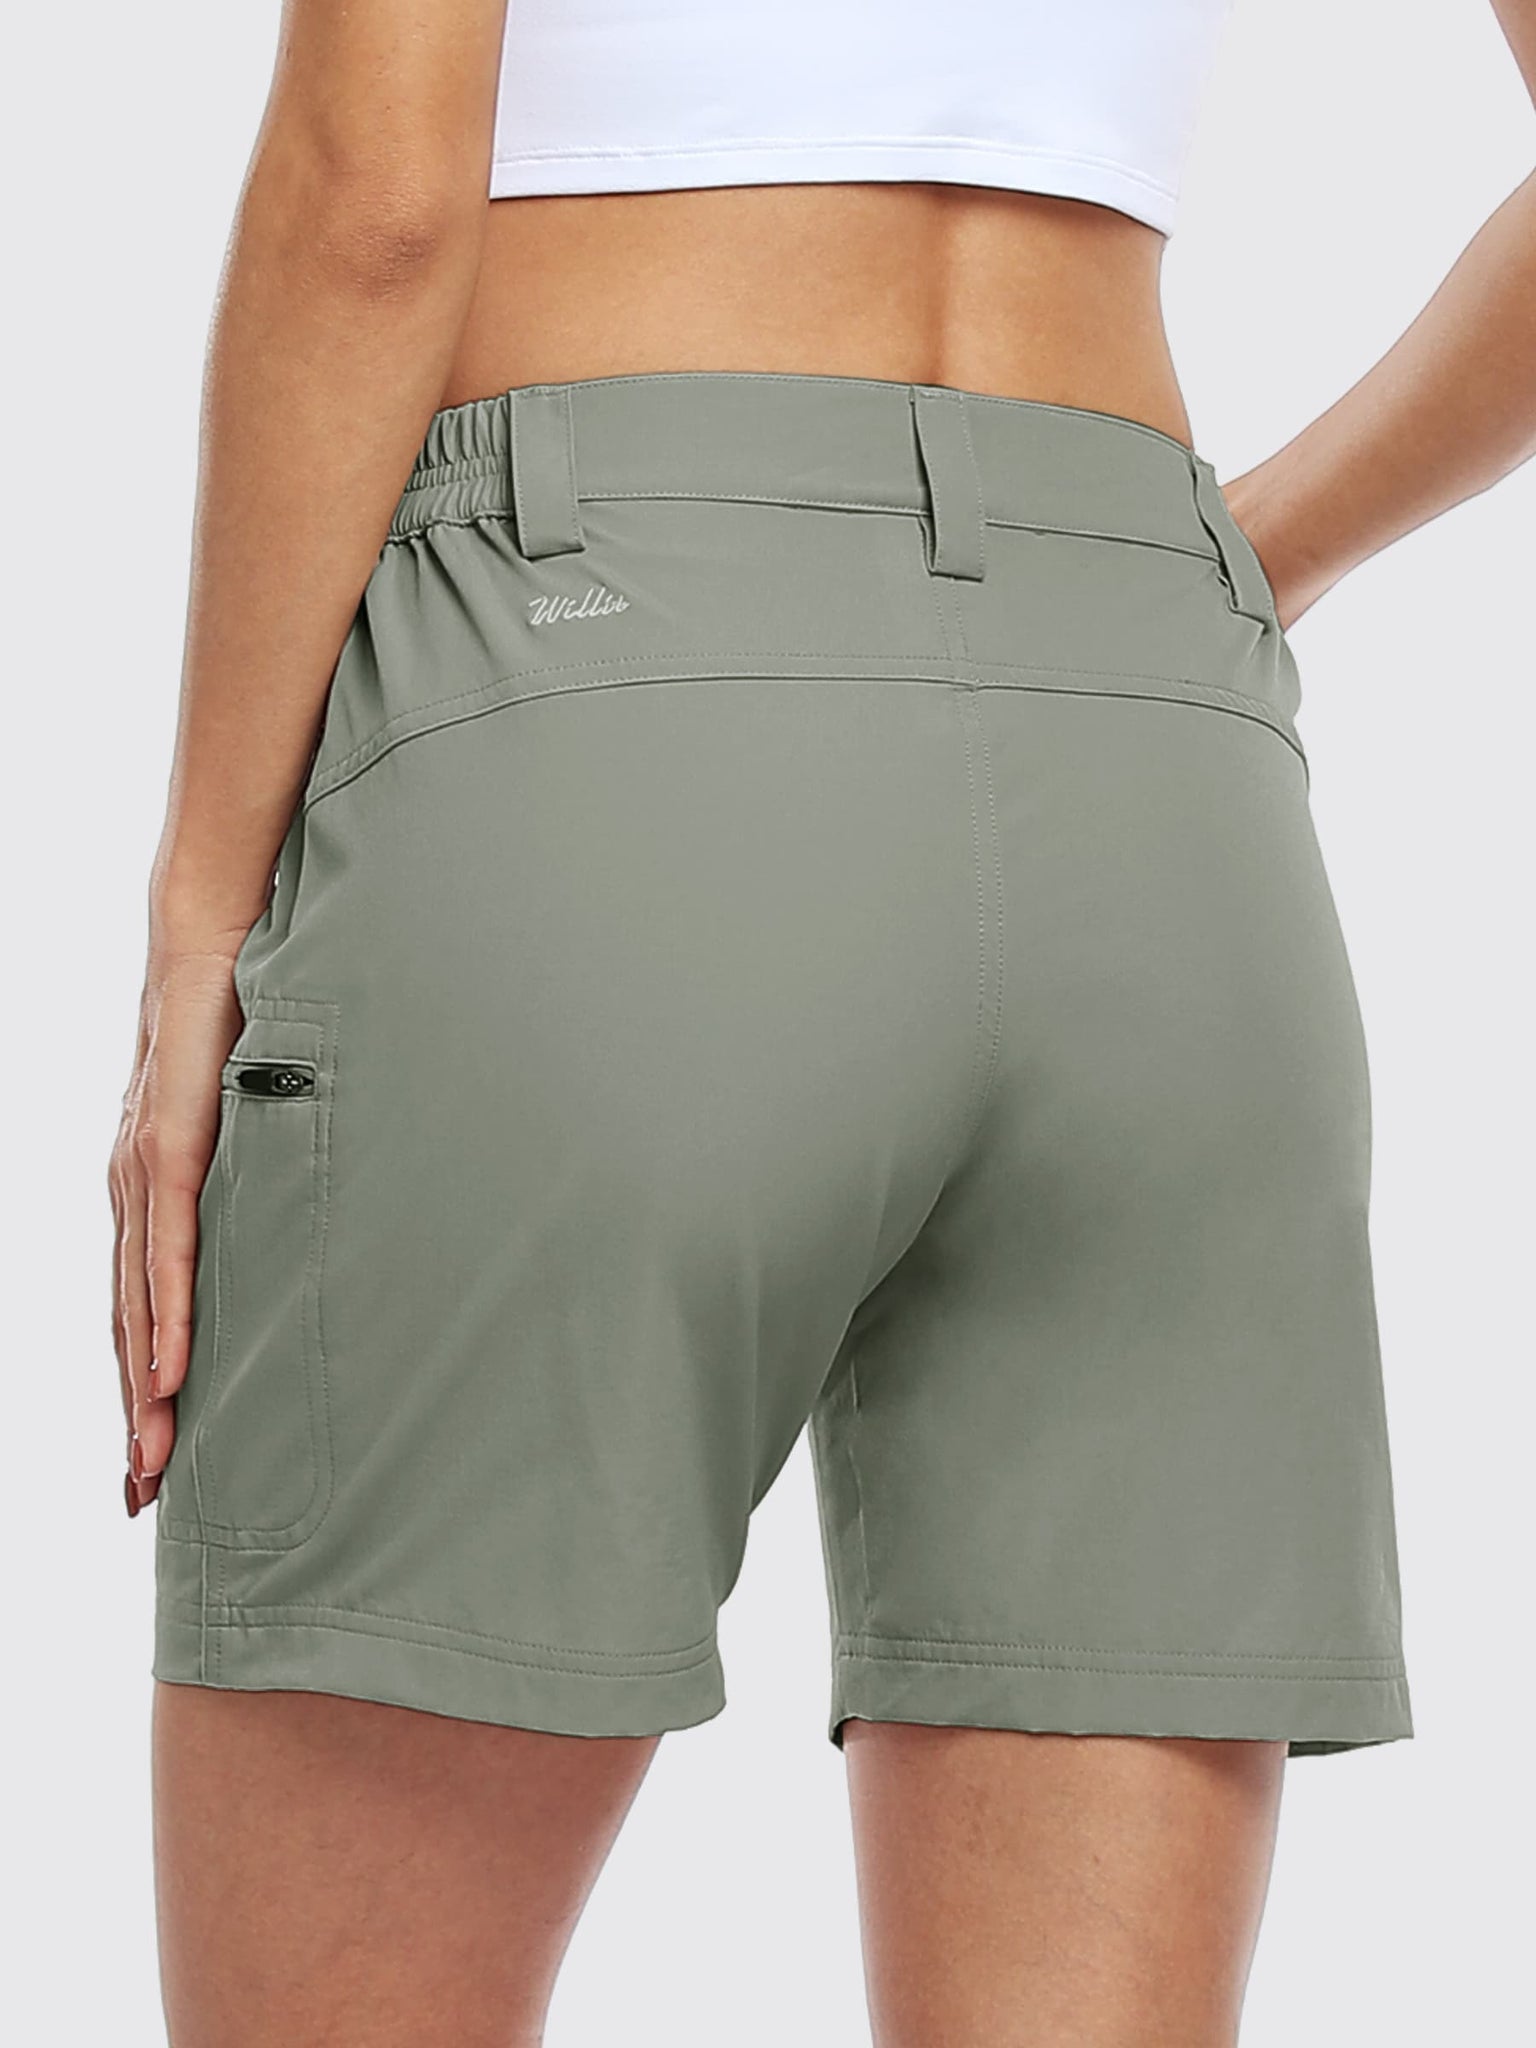 Willit Women's Outdoor Cargo Shorts 6 Inseam_Green_model5